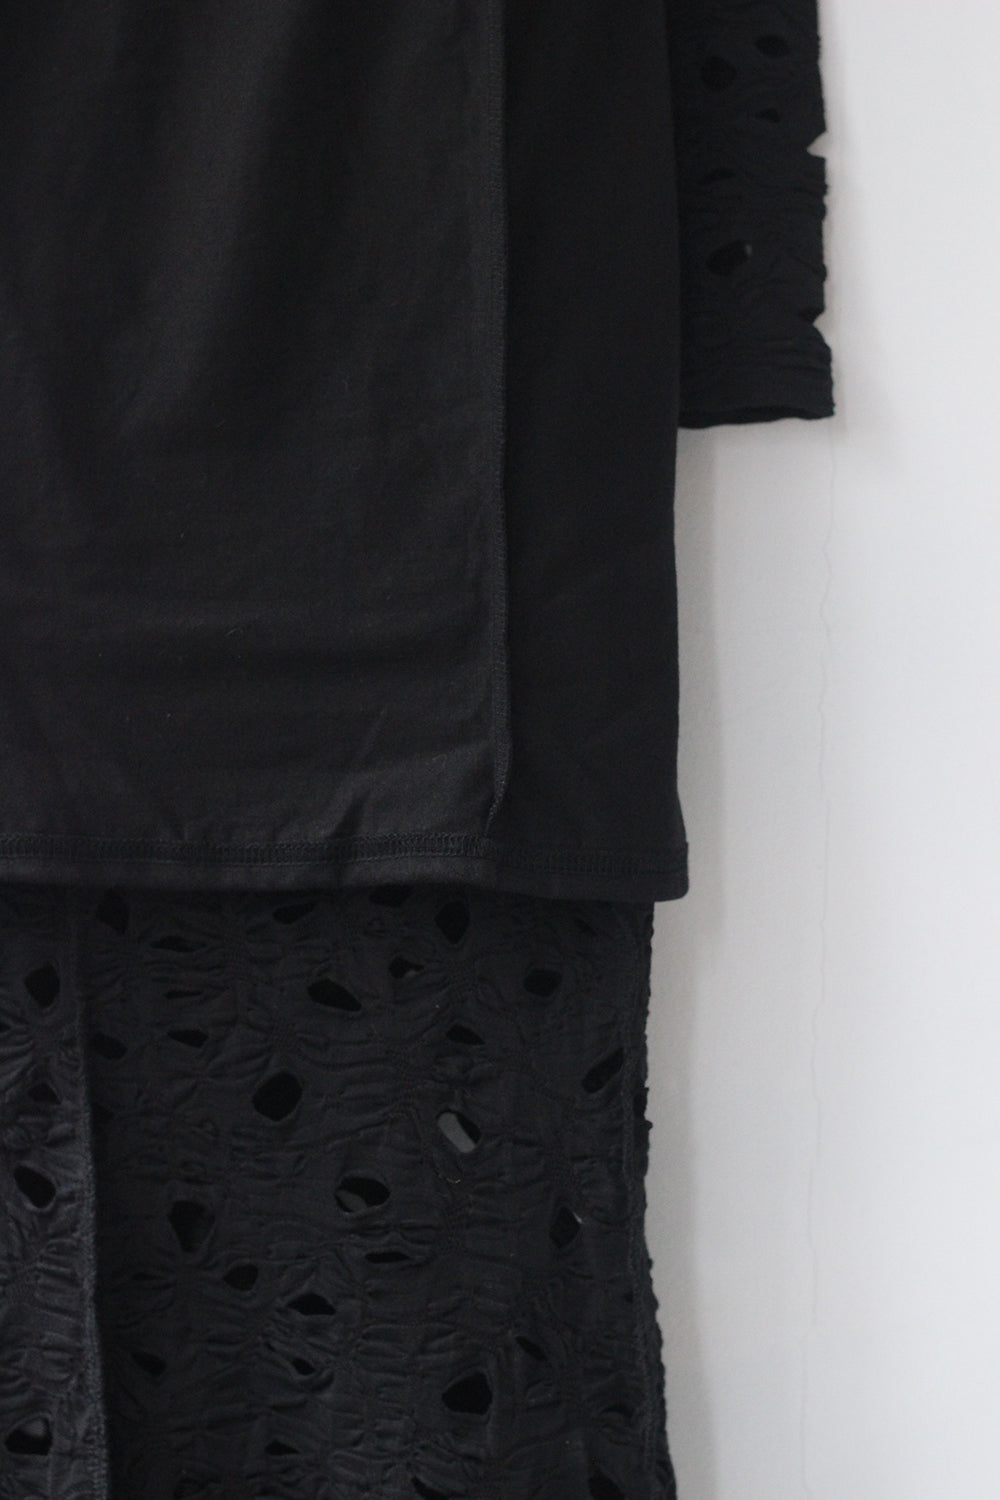 ERiKO KATORi "hole cotton backless dress" (black)